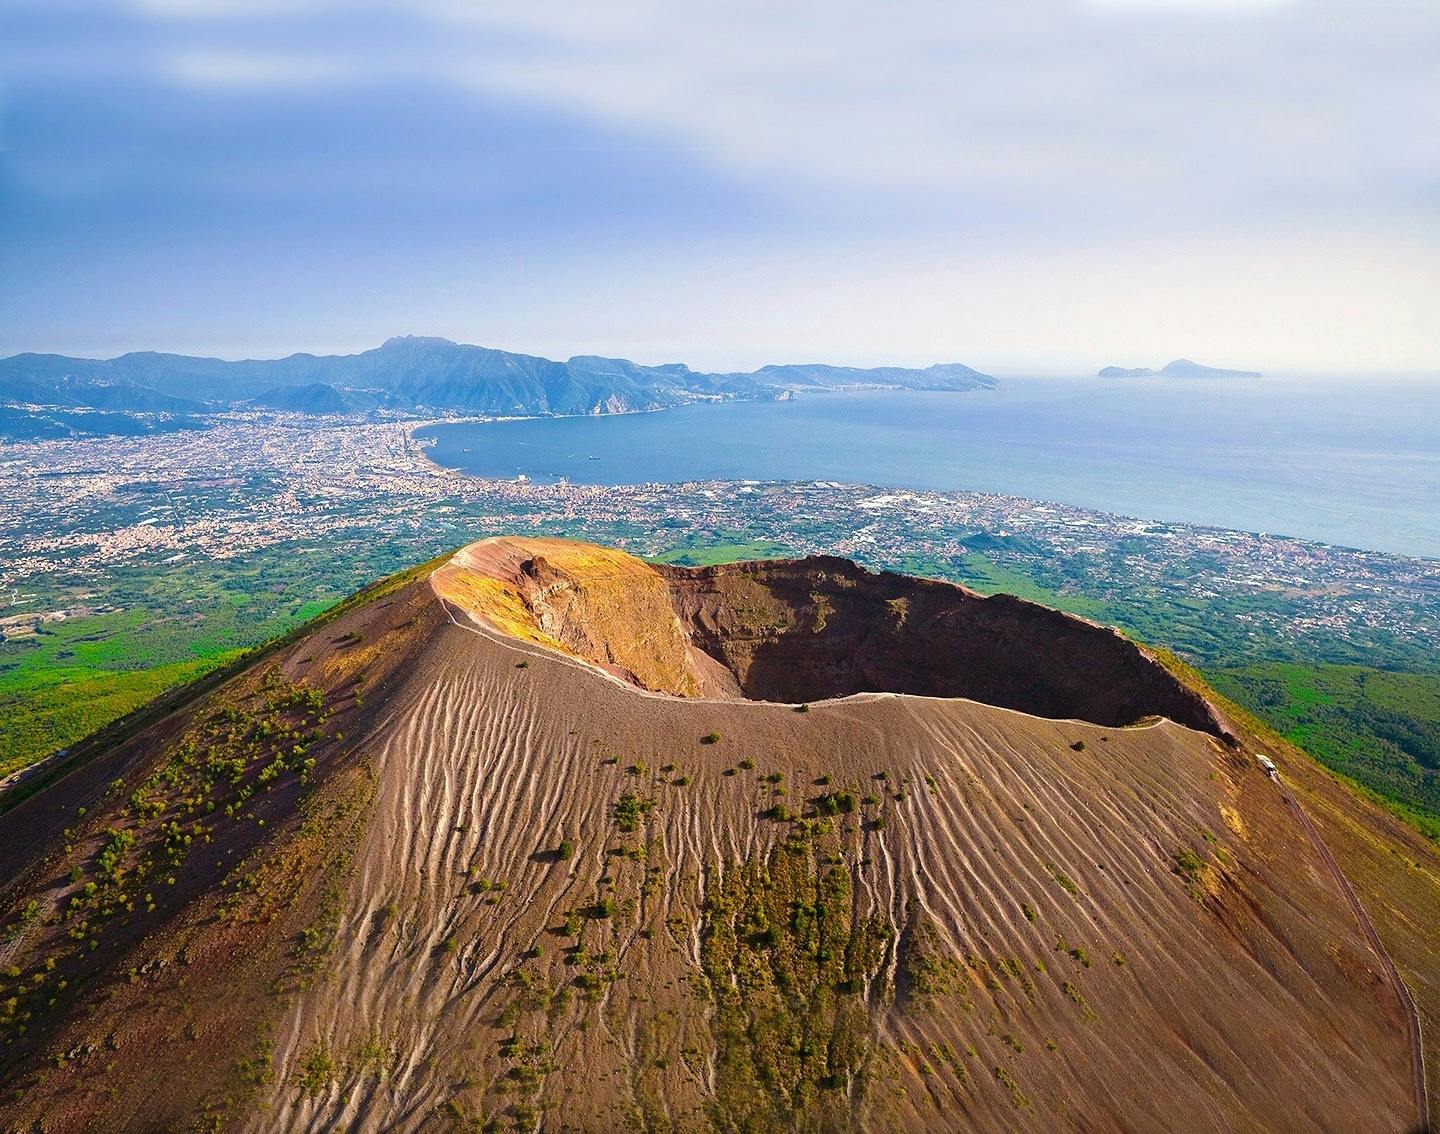 Vesuvius en Pompeii-tour met audiogids uit Salerno